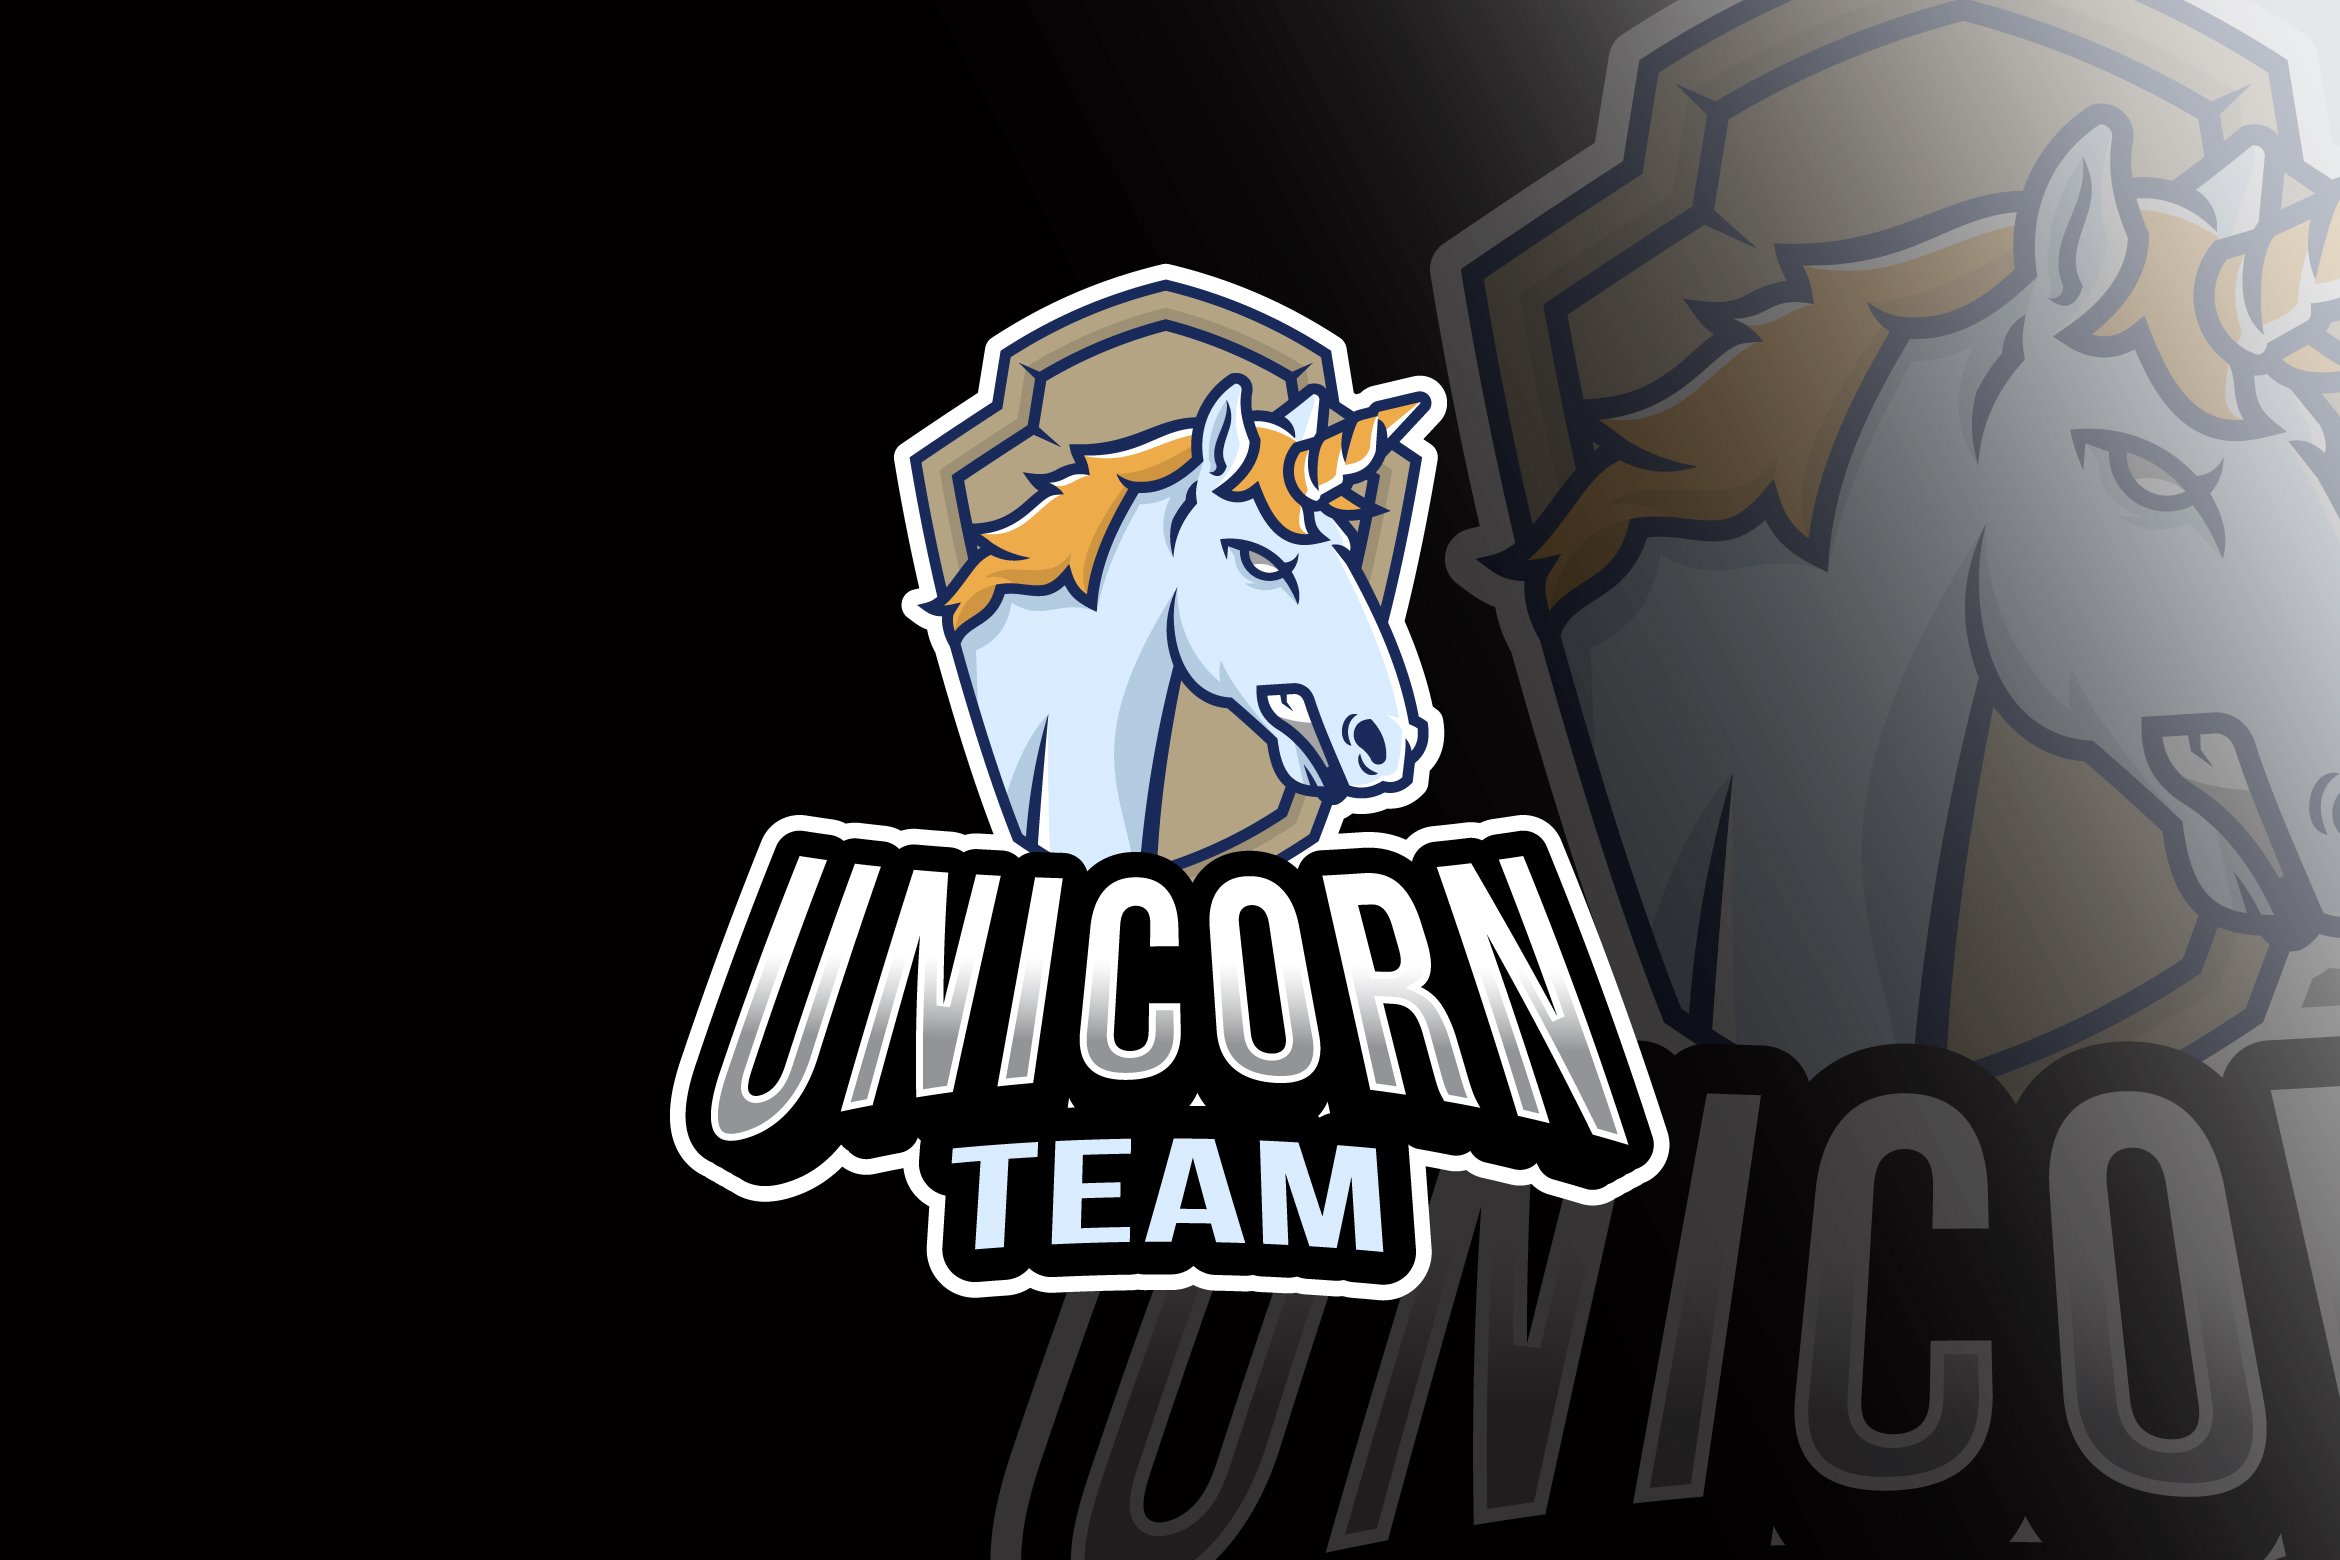 Unicorn Team Esport Logo Template cover image.